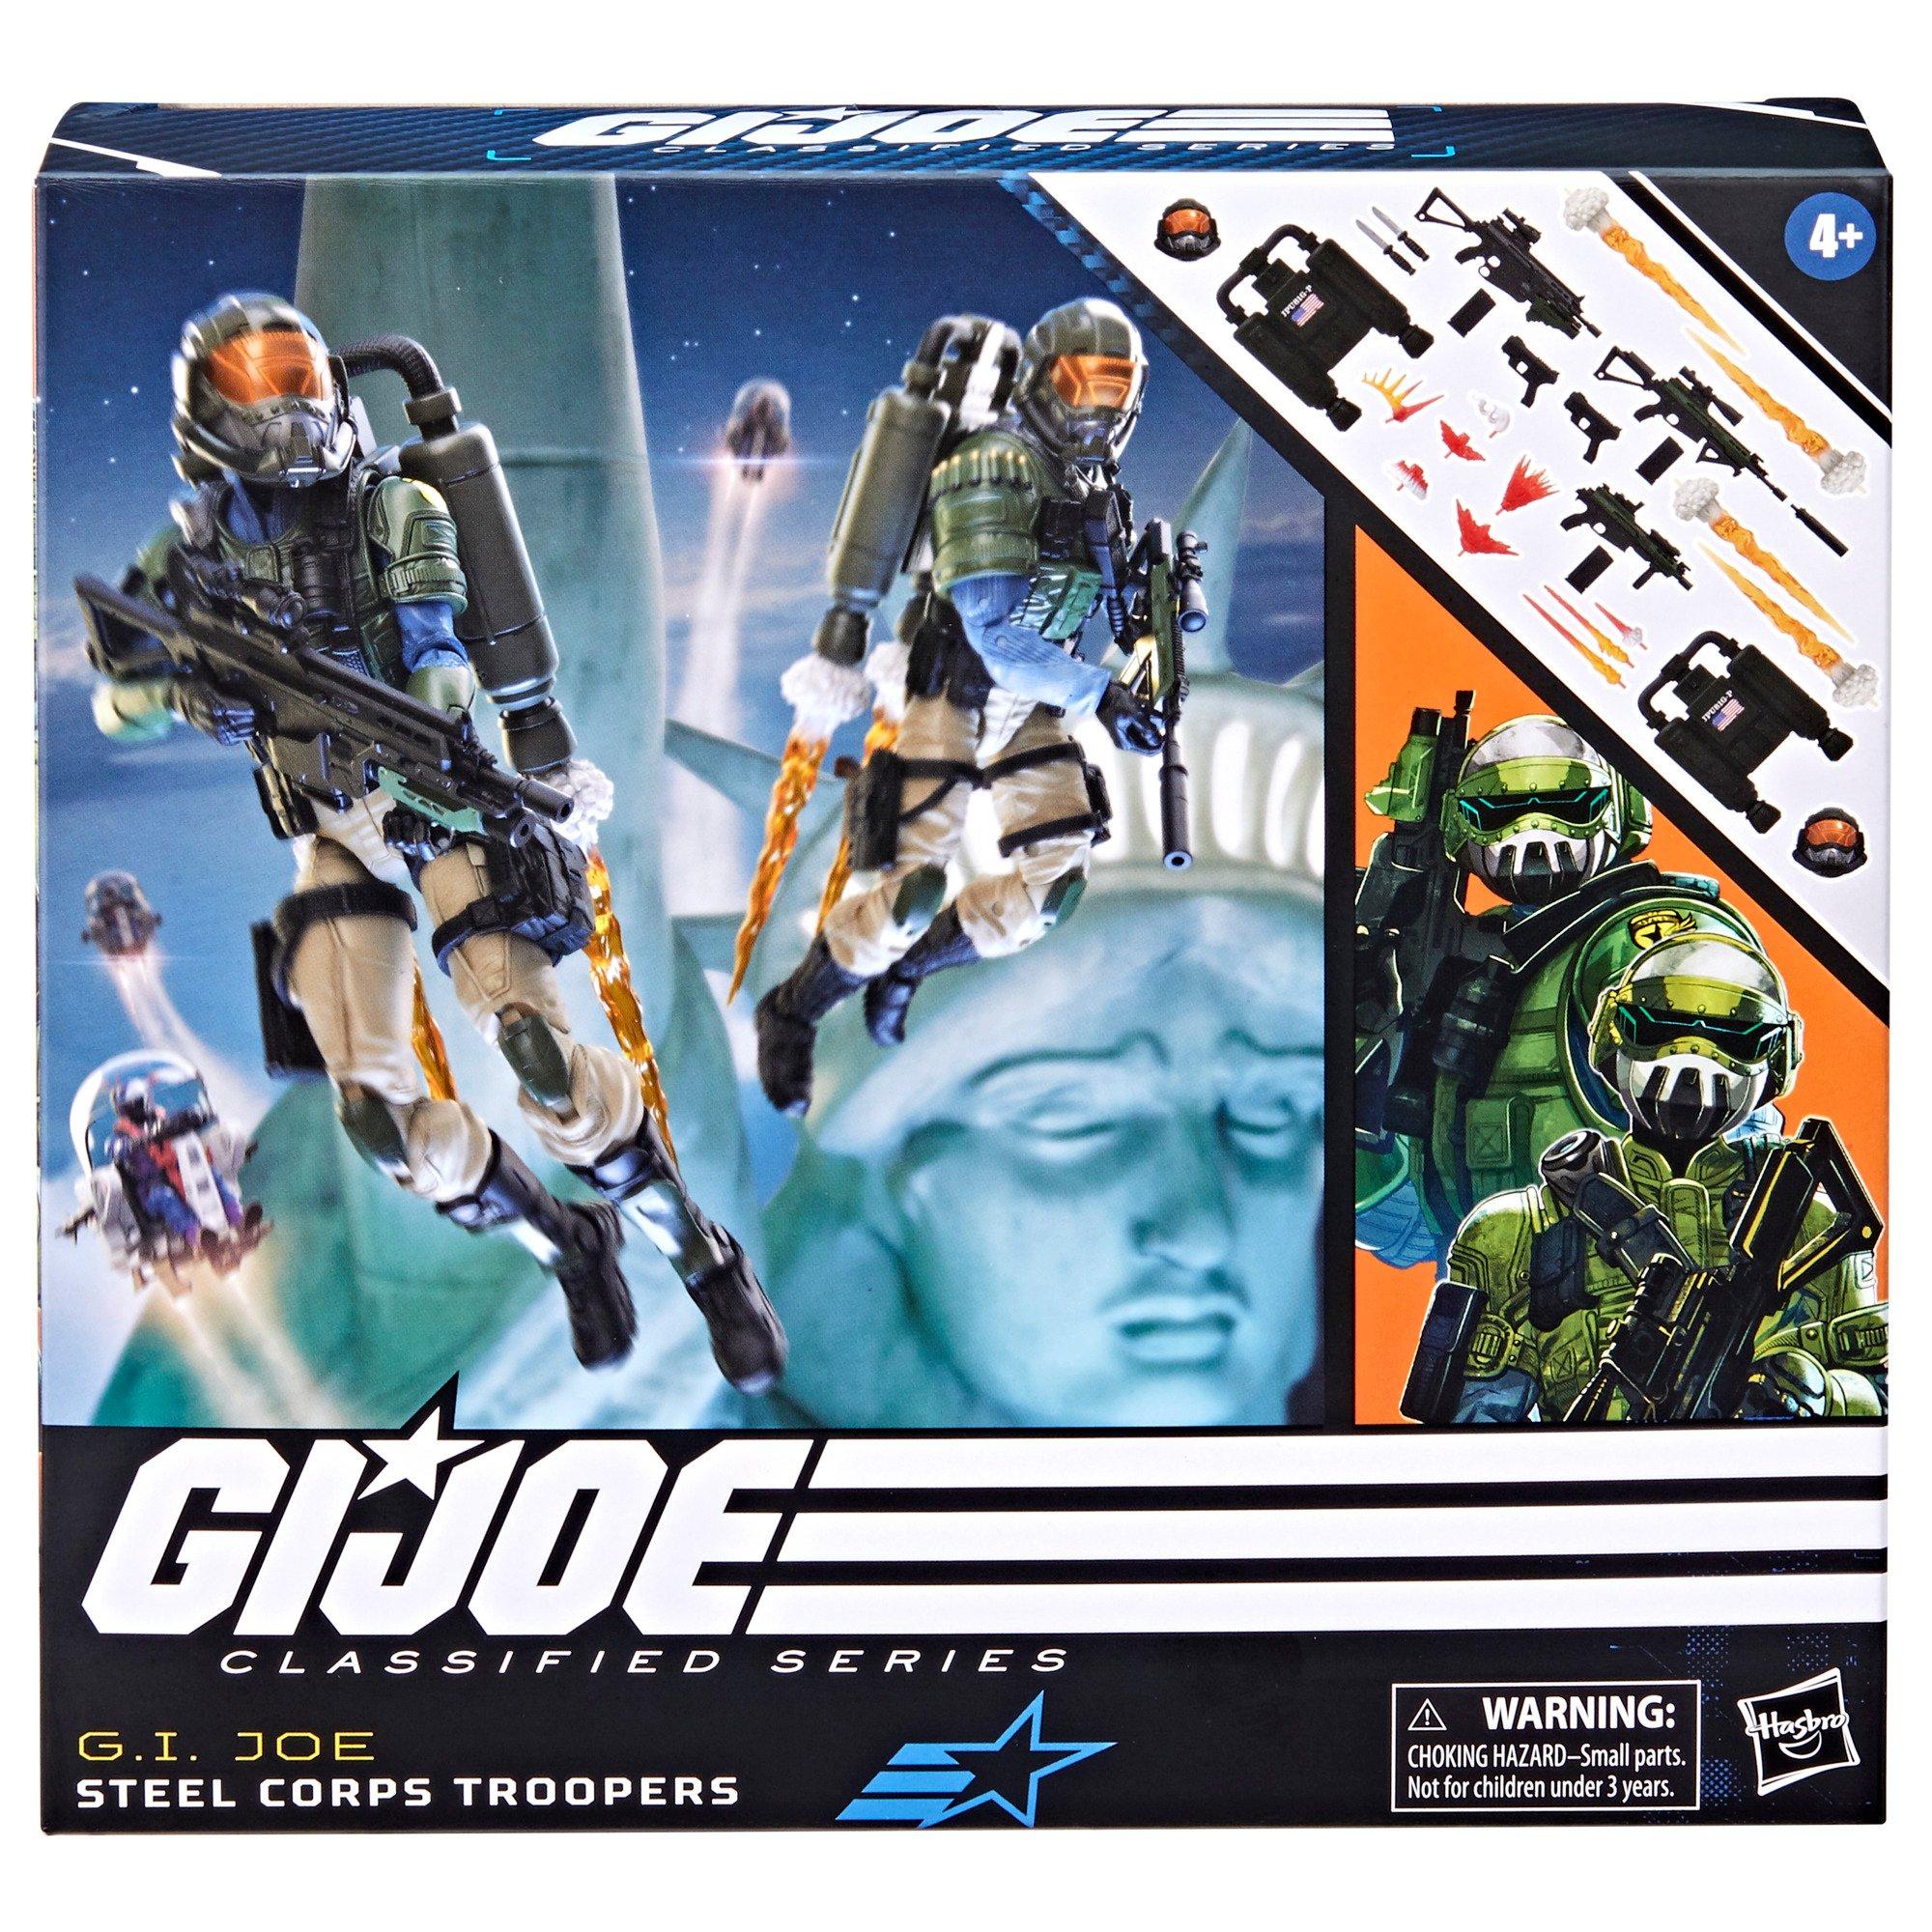 Hasbro G.I Joe Classified Series Steel Corps Troopers 6-in Action Figure Set 2-Pack